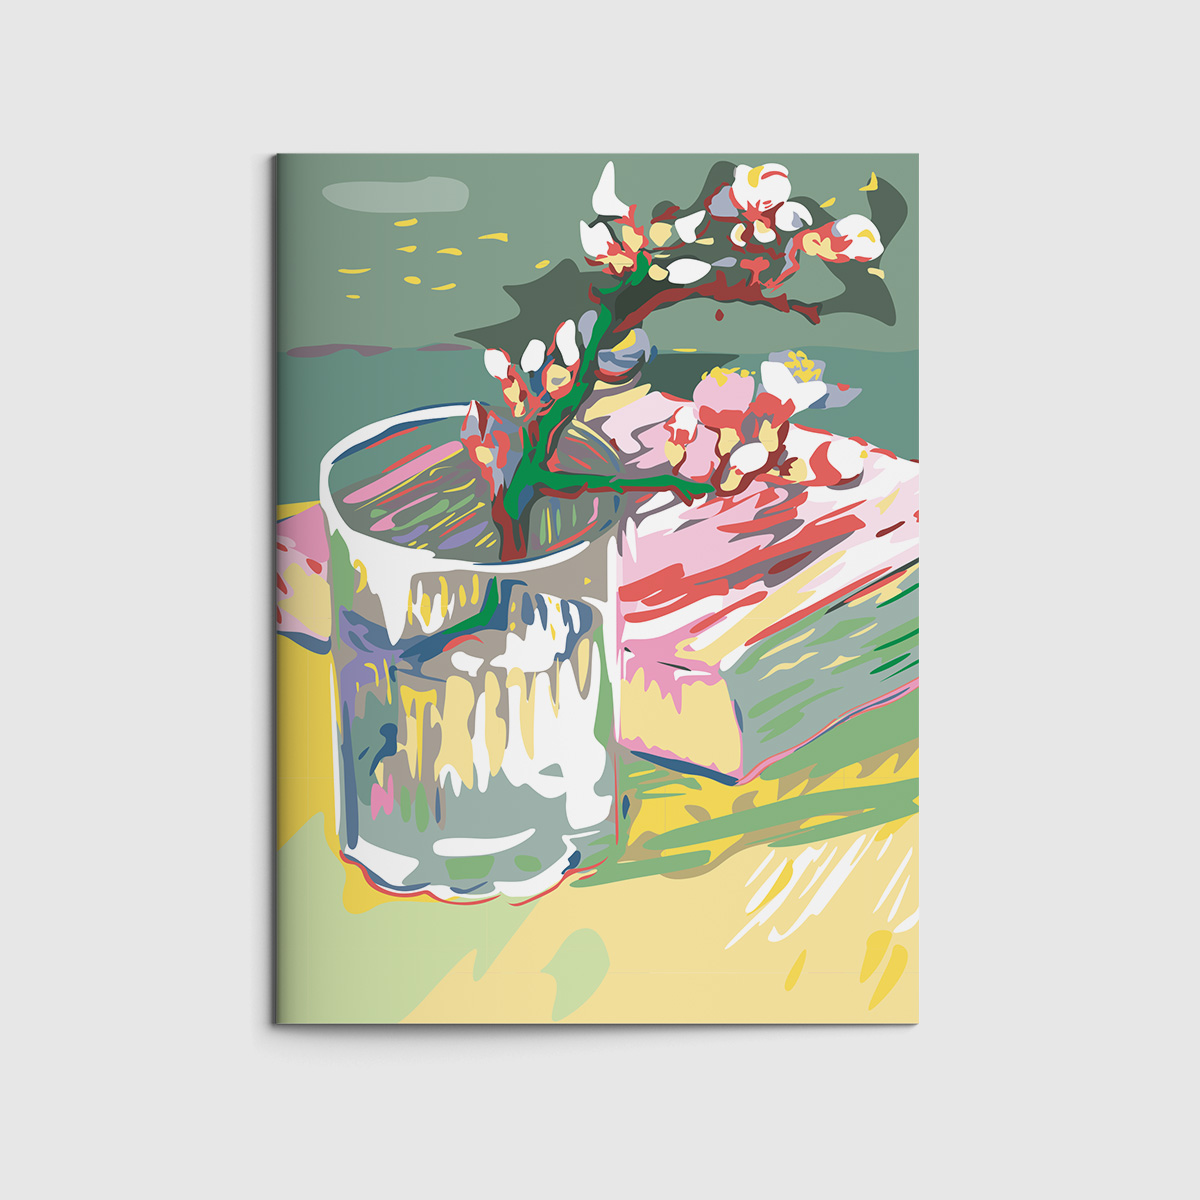 Heft A6 - Museum Art - Blossoming Almond Branch in a Glass" - van Gogh